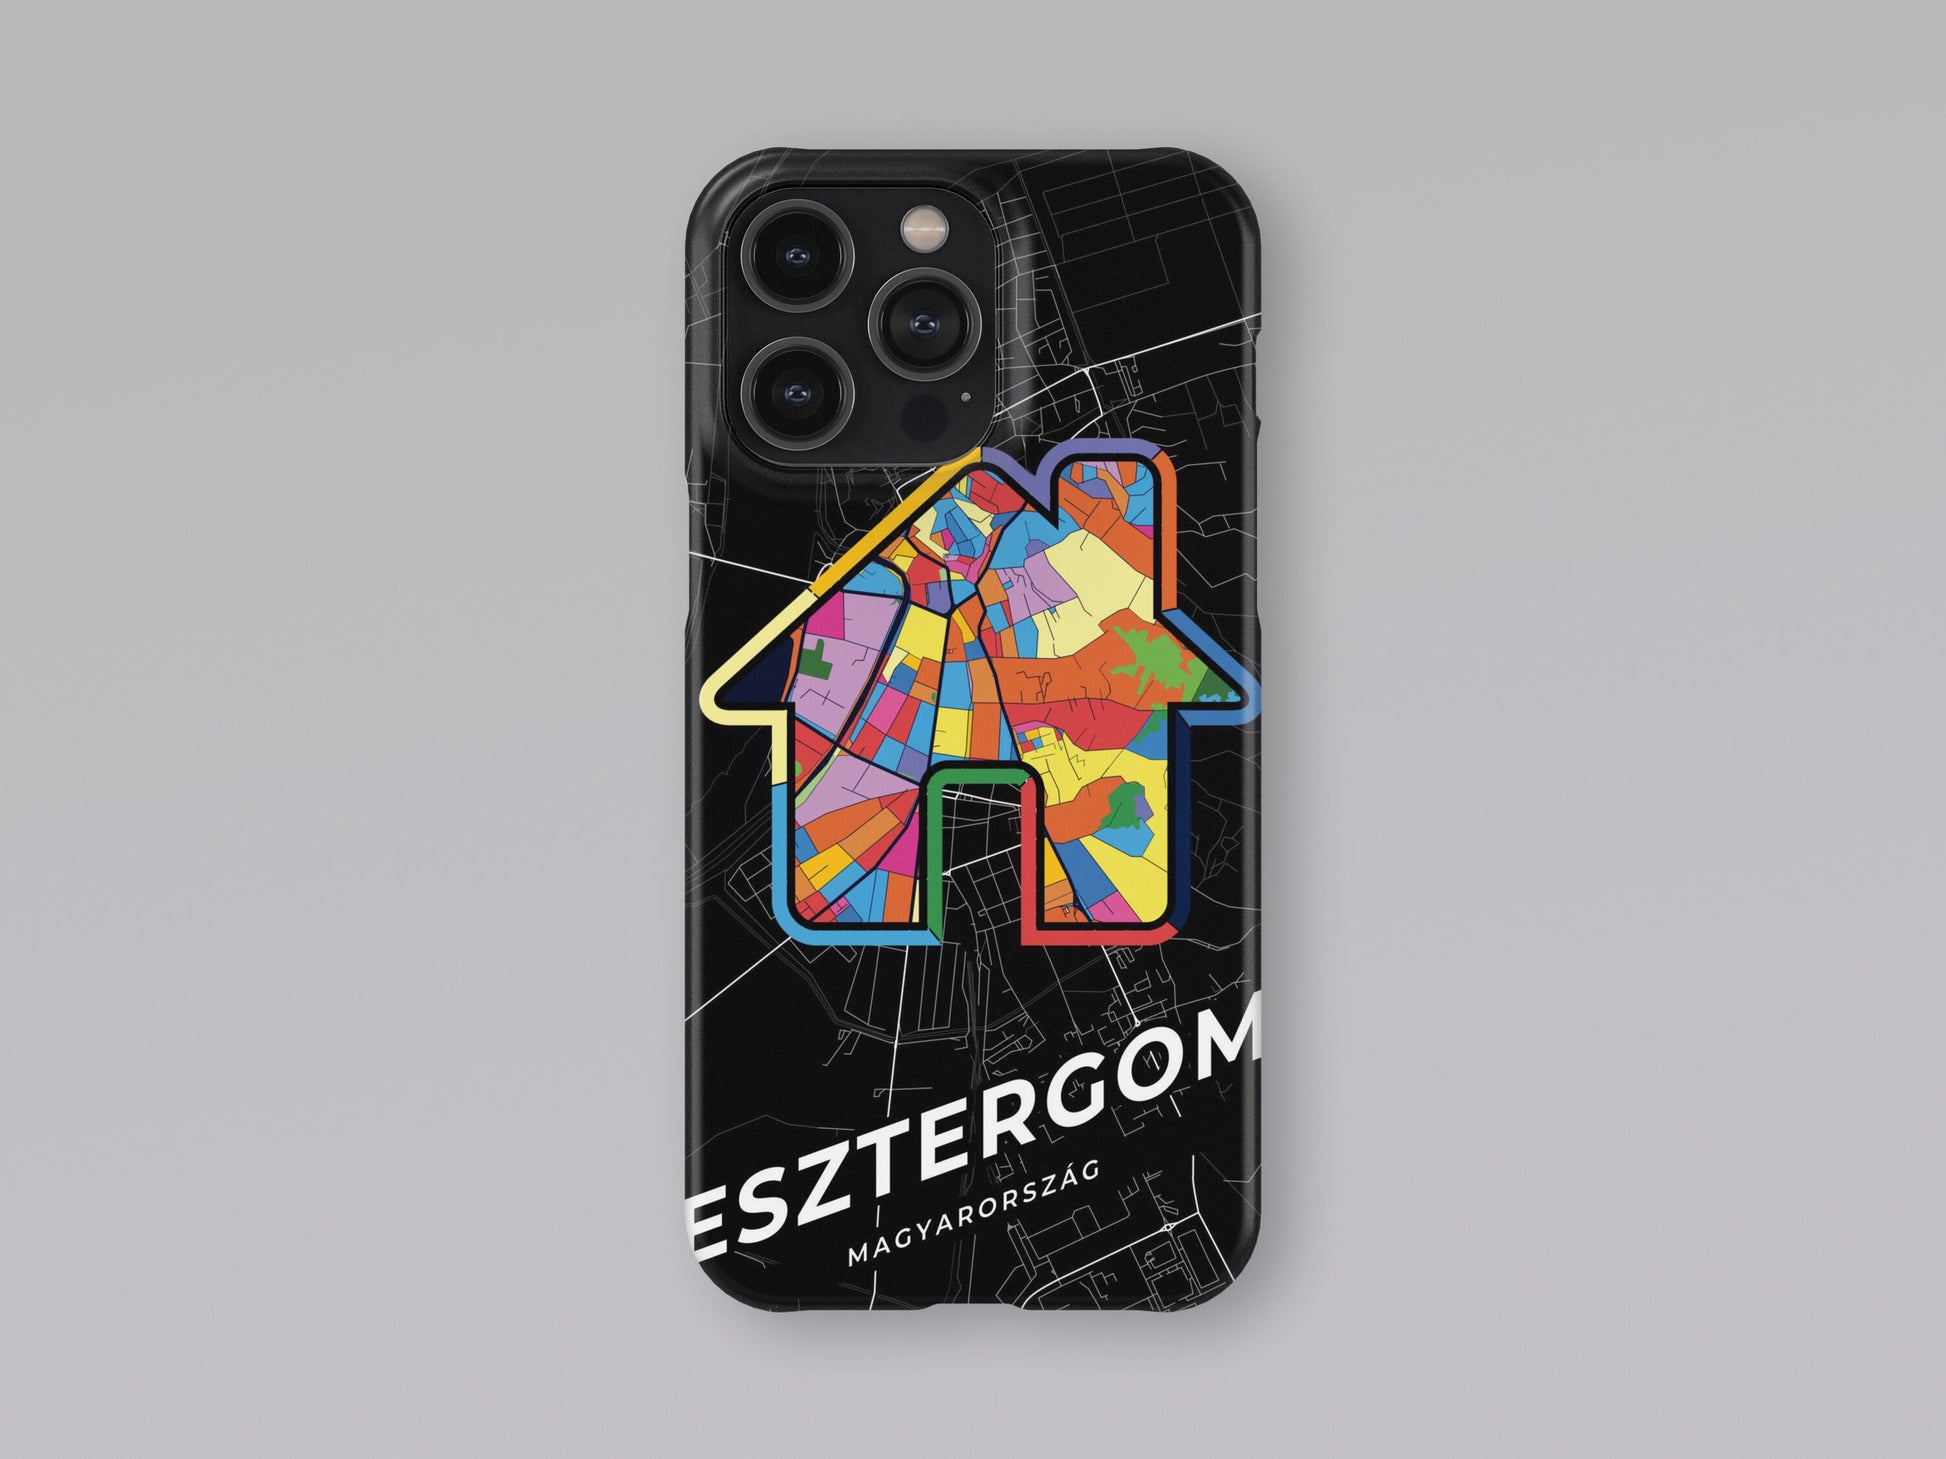 Esztergom Hungary slim phone case with colorful icon. Birthday, wedding or housewarming gift. Couple match cases. 3